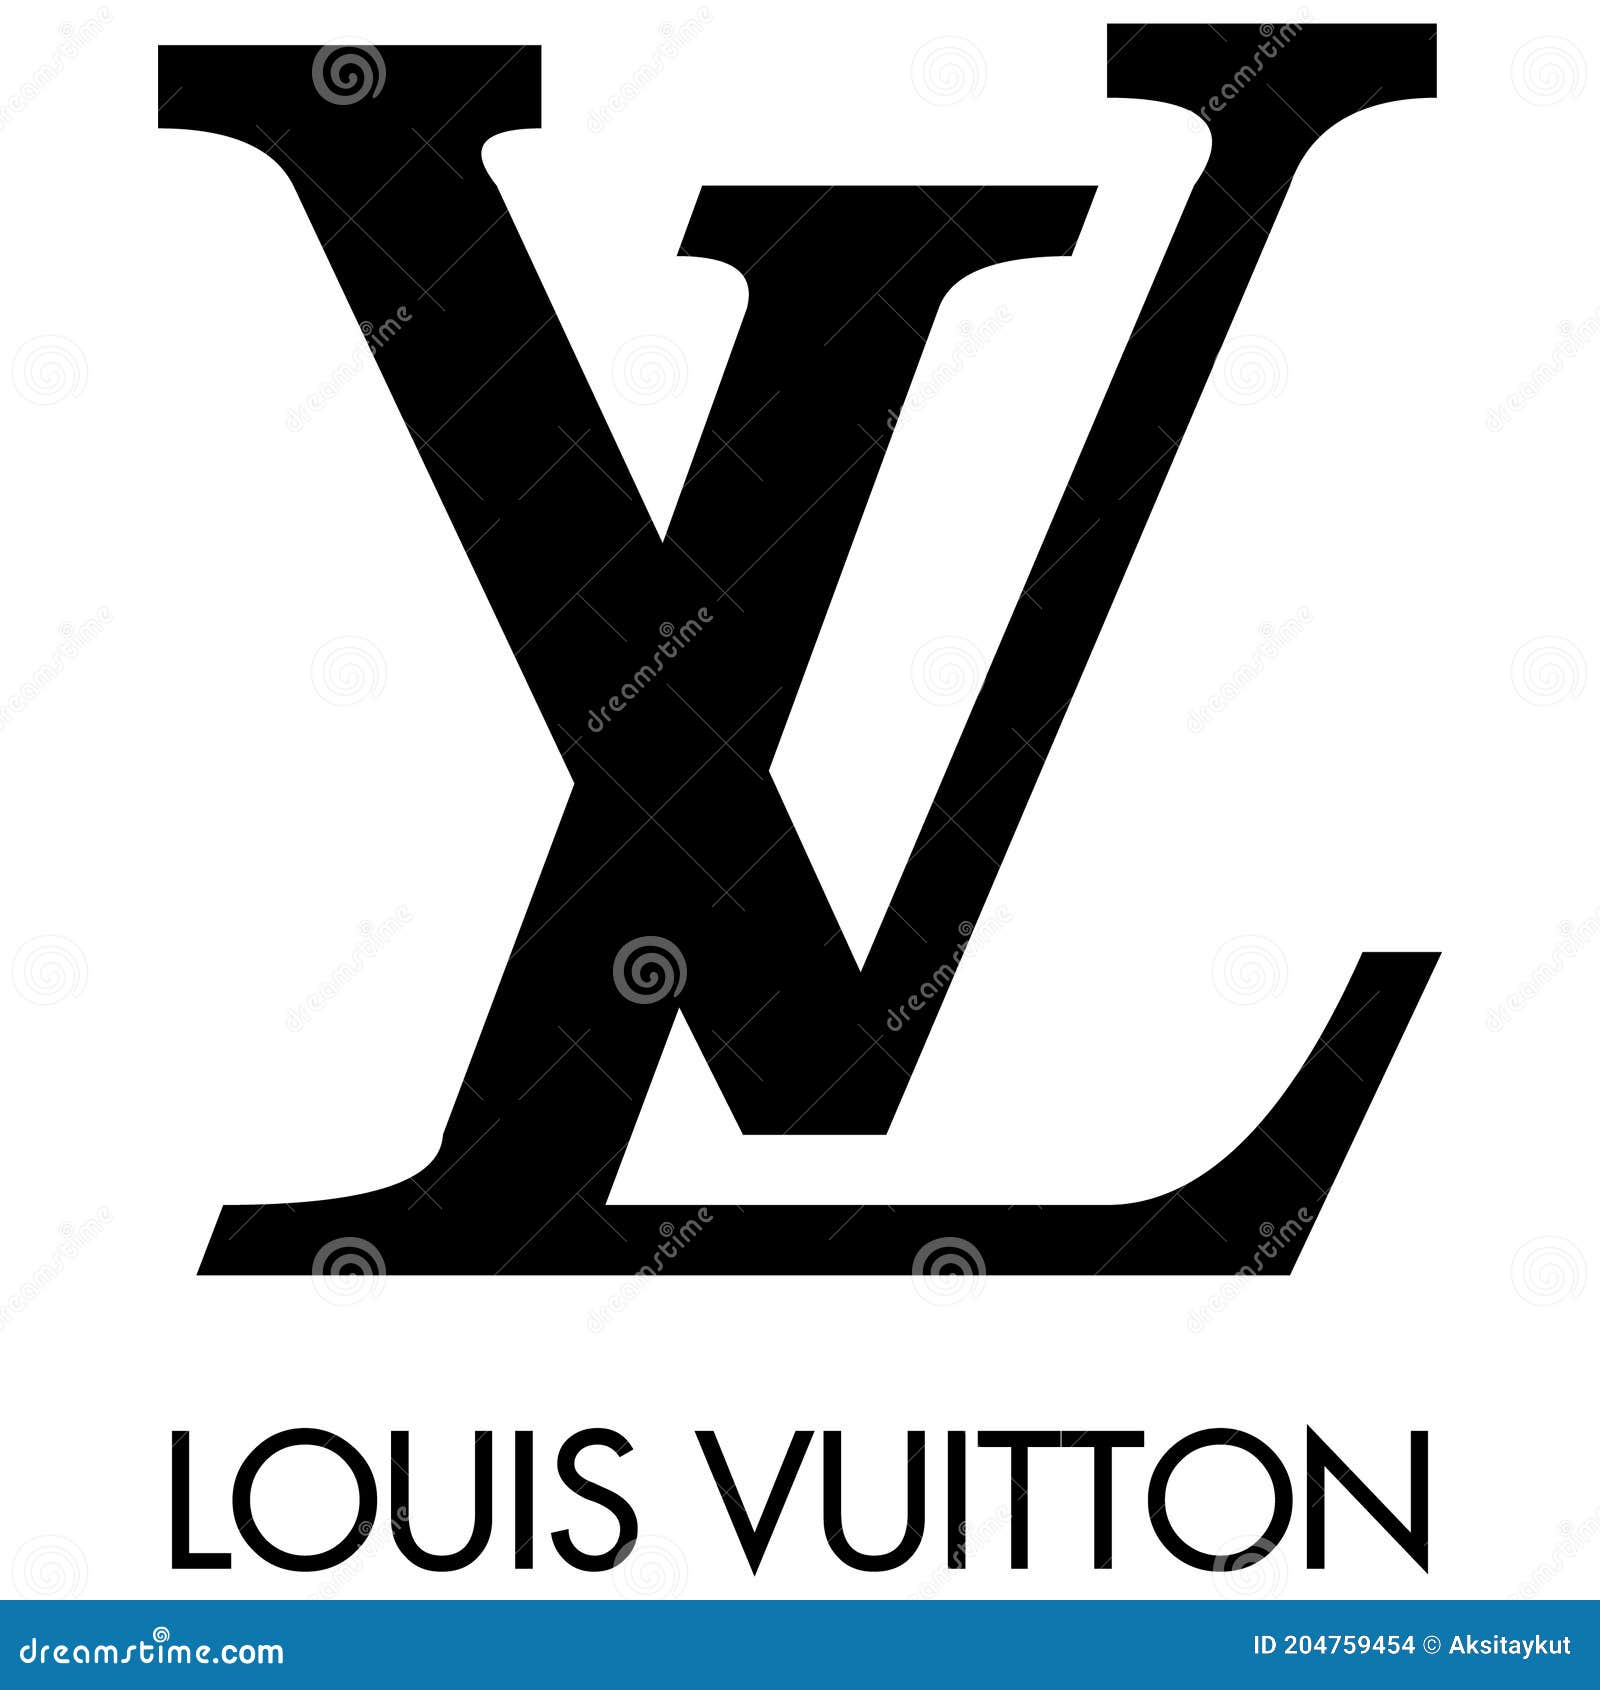 Louis vuitton LV logo on paper texture illustration Stock Photo